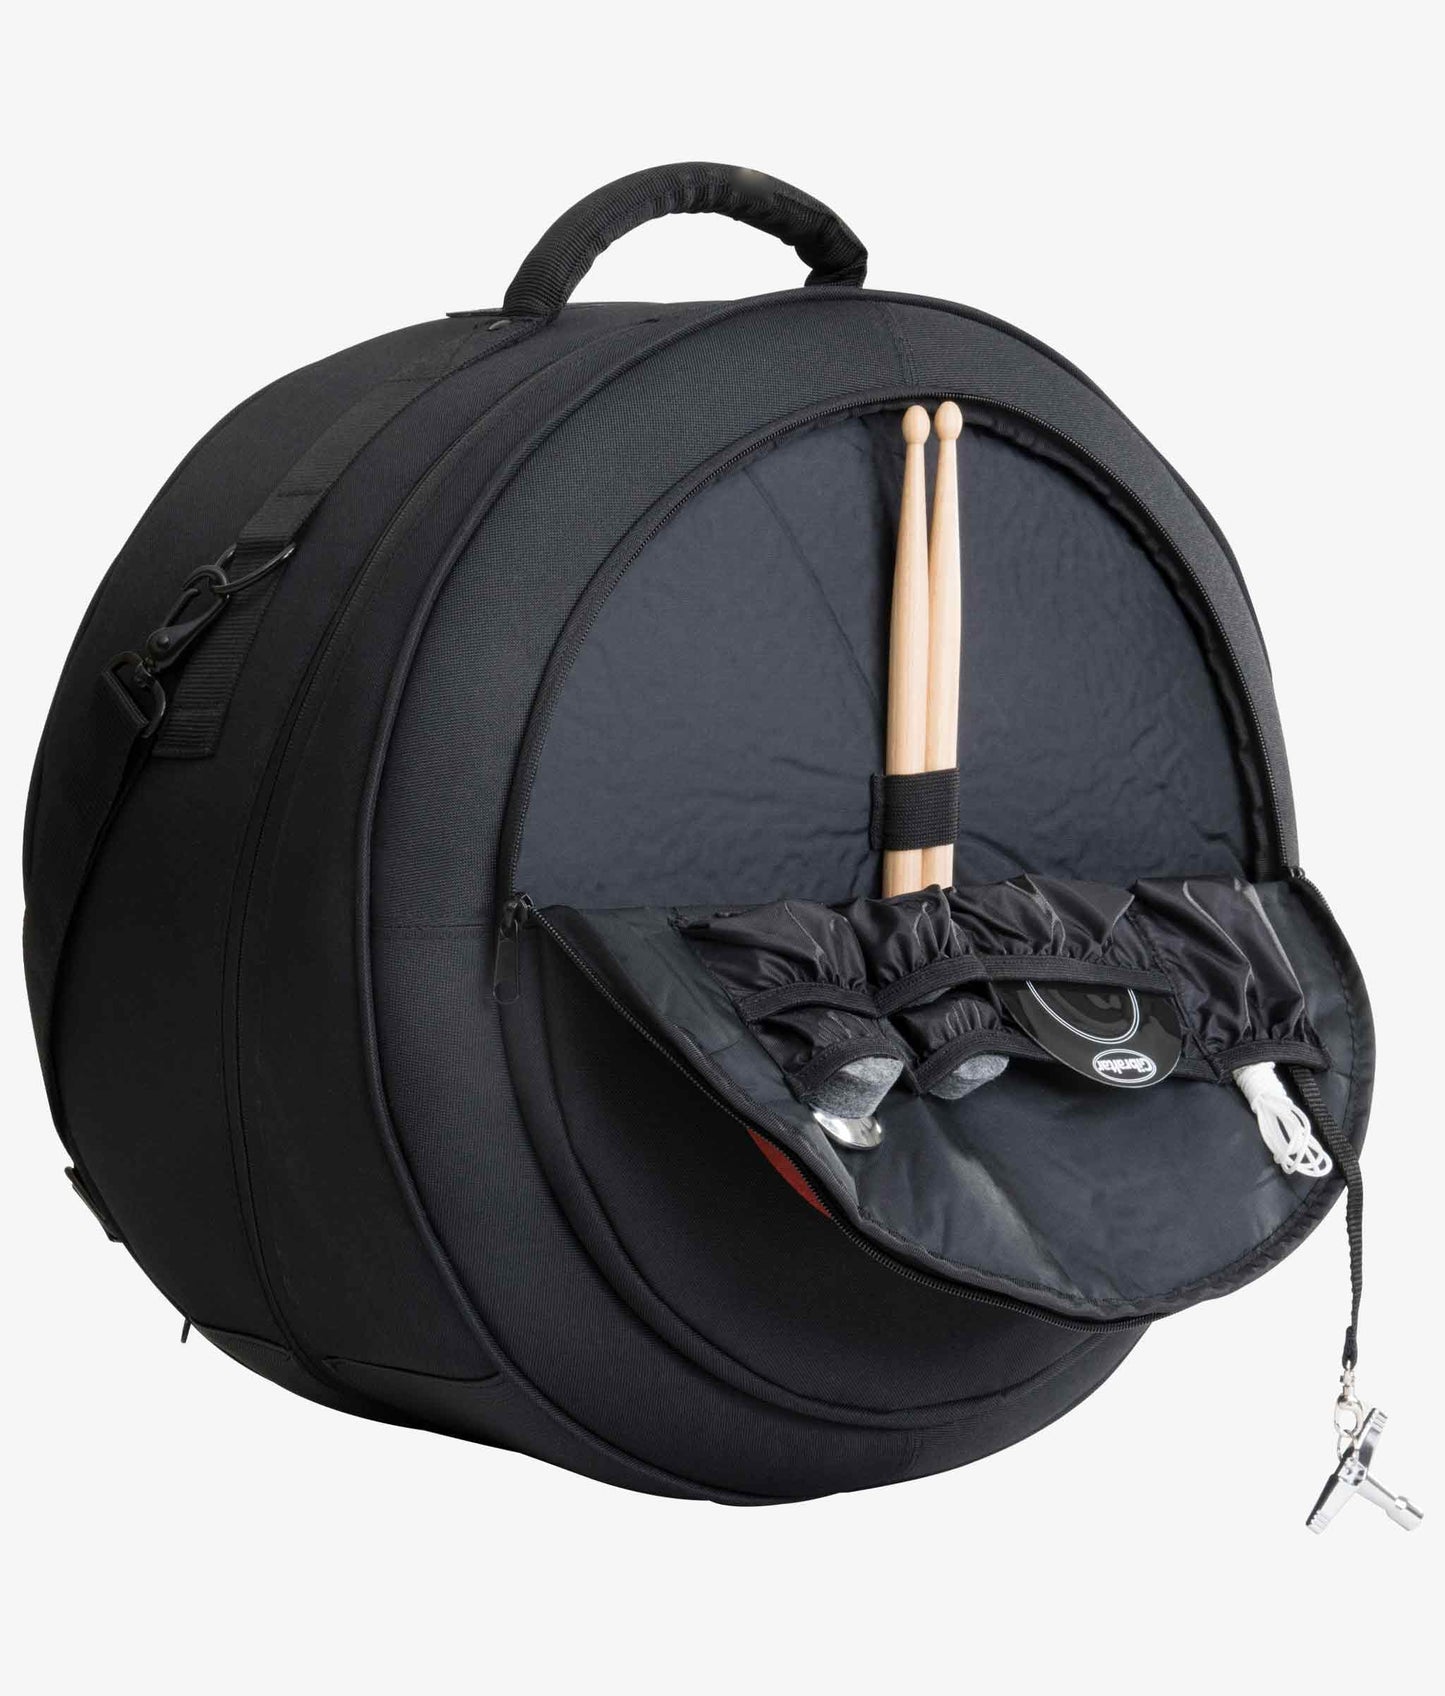 Gibraltar GPSBCZ 14" Deluxe Snare Drum Bag, Cross-Cut Zipper - Snare Drum Case | Gibraltar